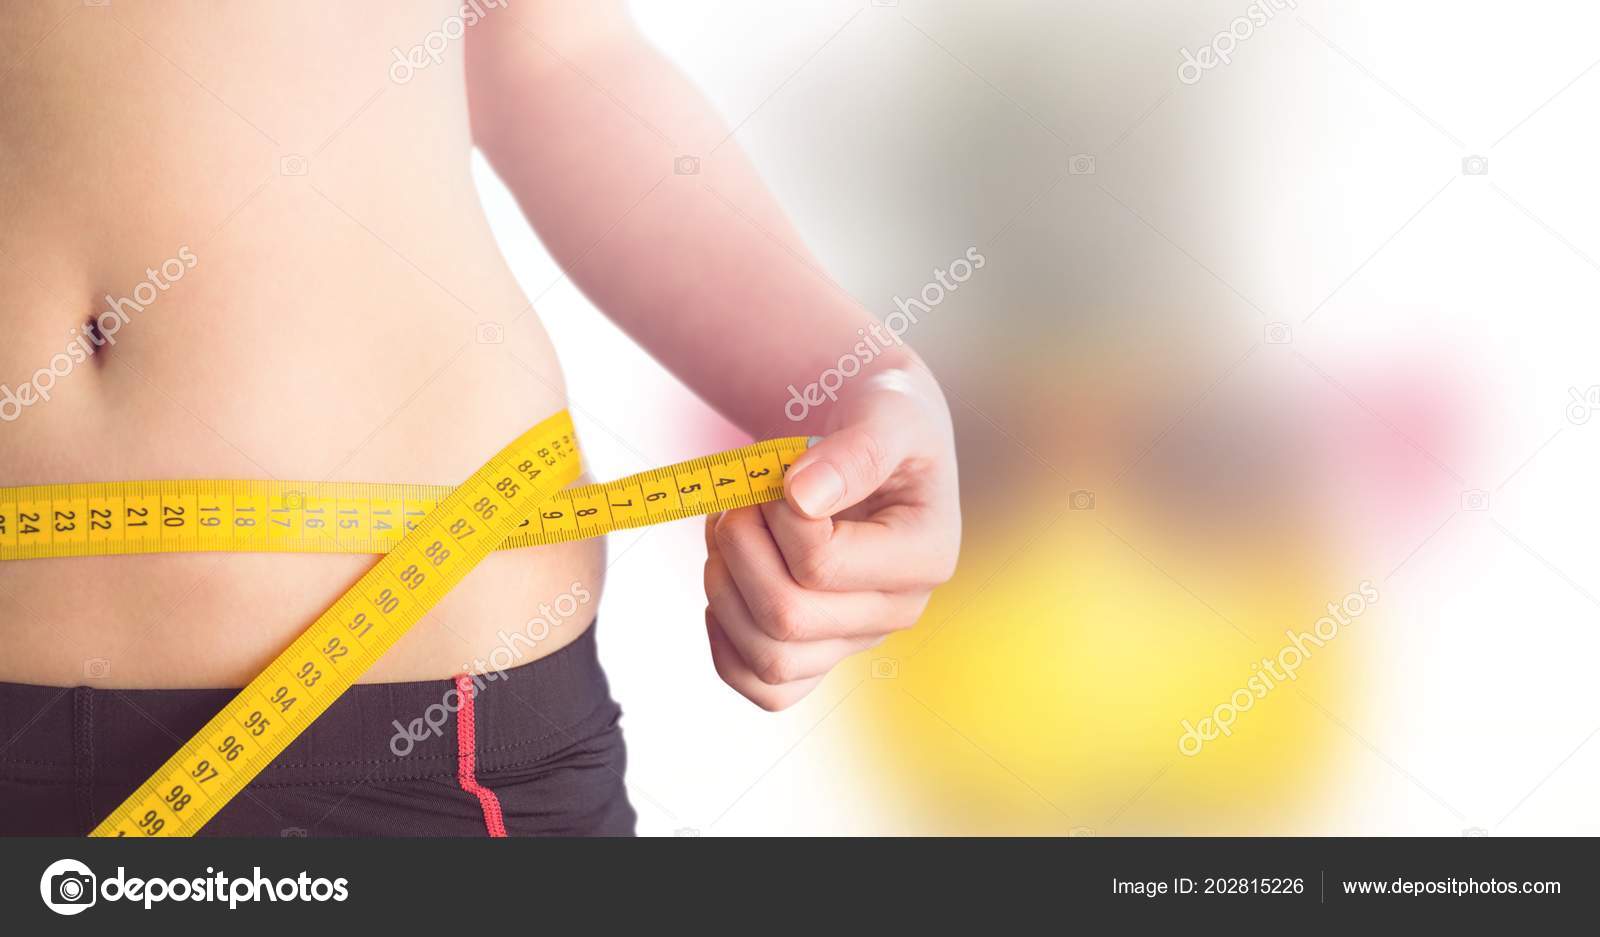 weight measuring tape